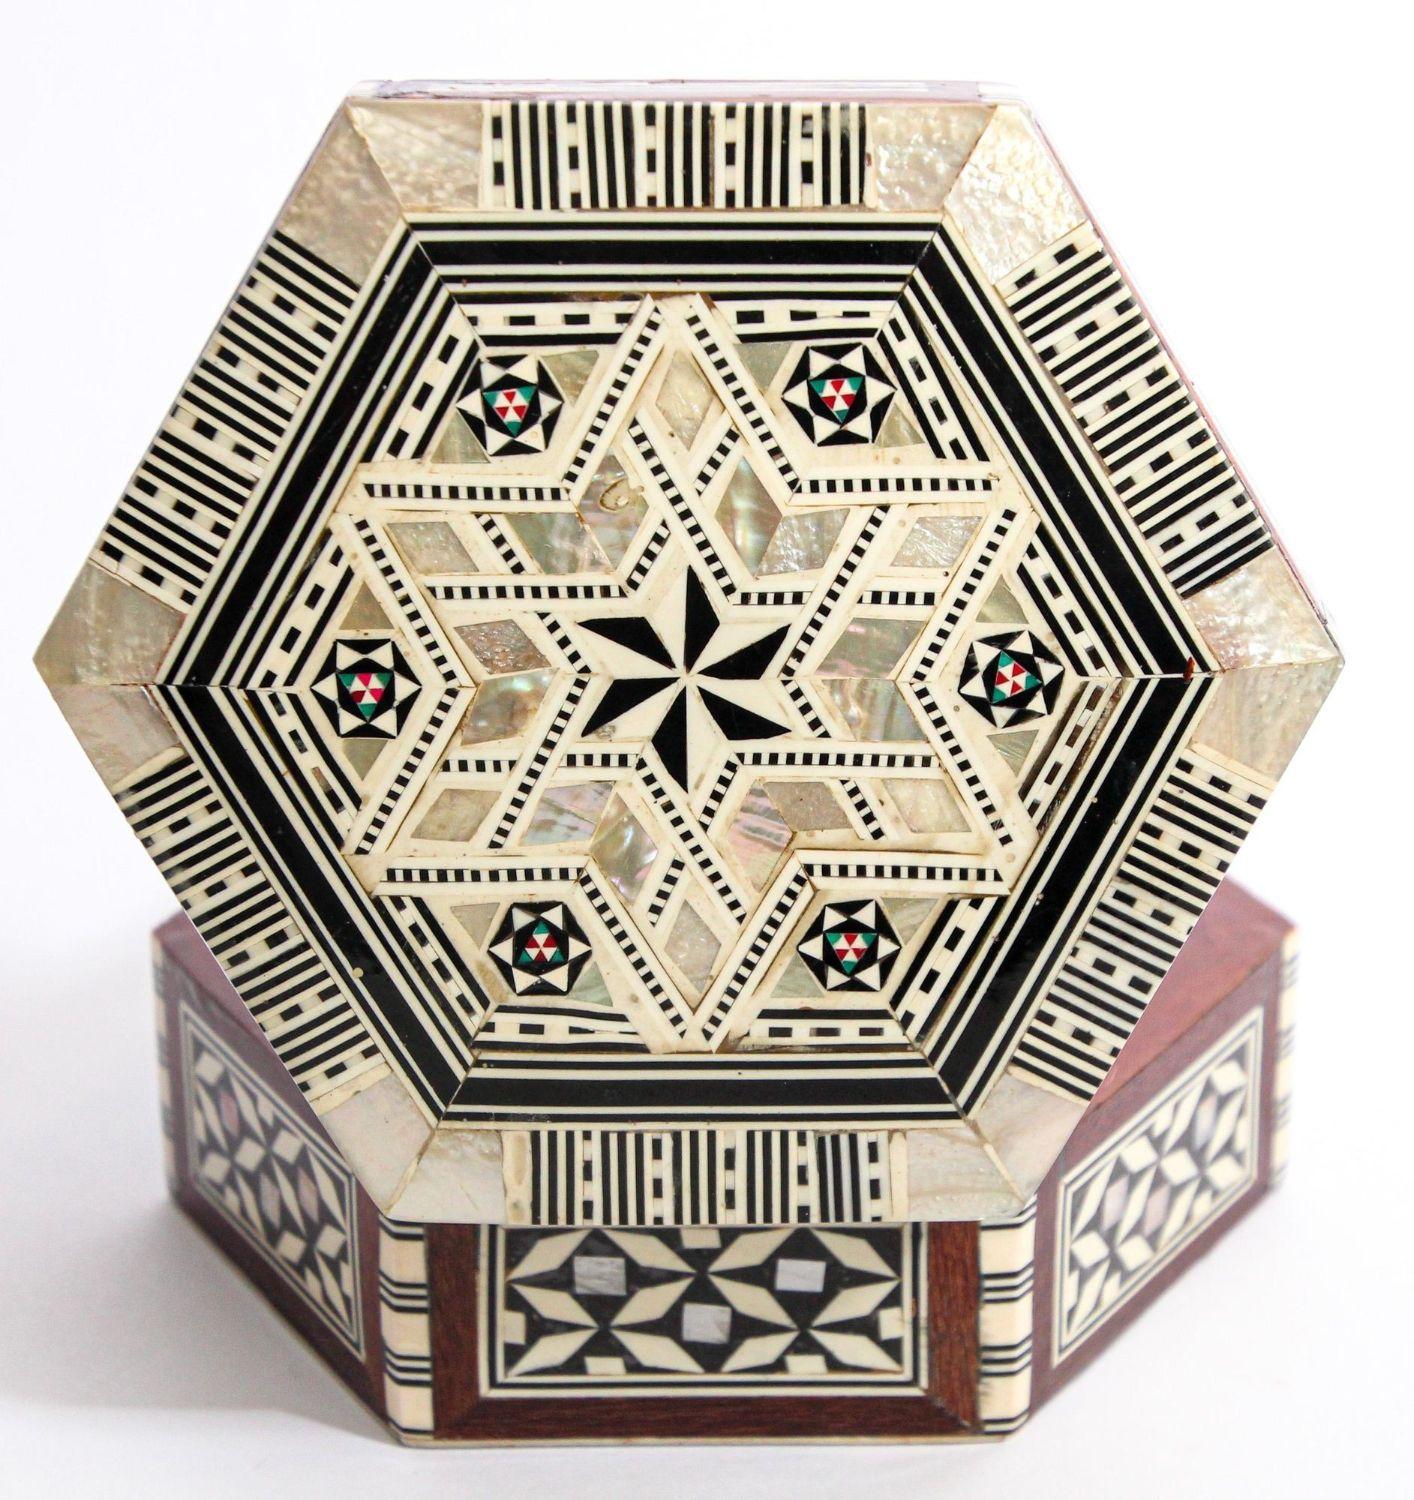 20th Century Moorish Handcrafted Hexagonal Box With Mosaic Inlaid